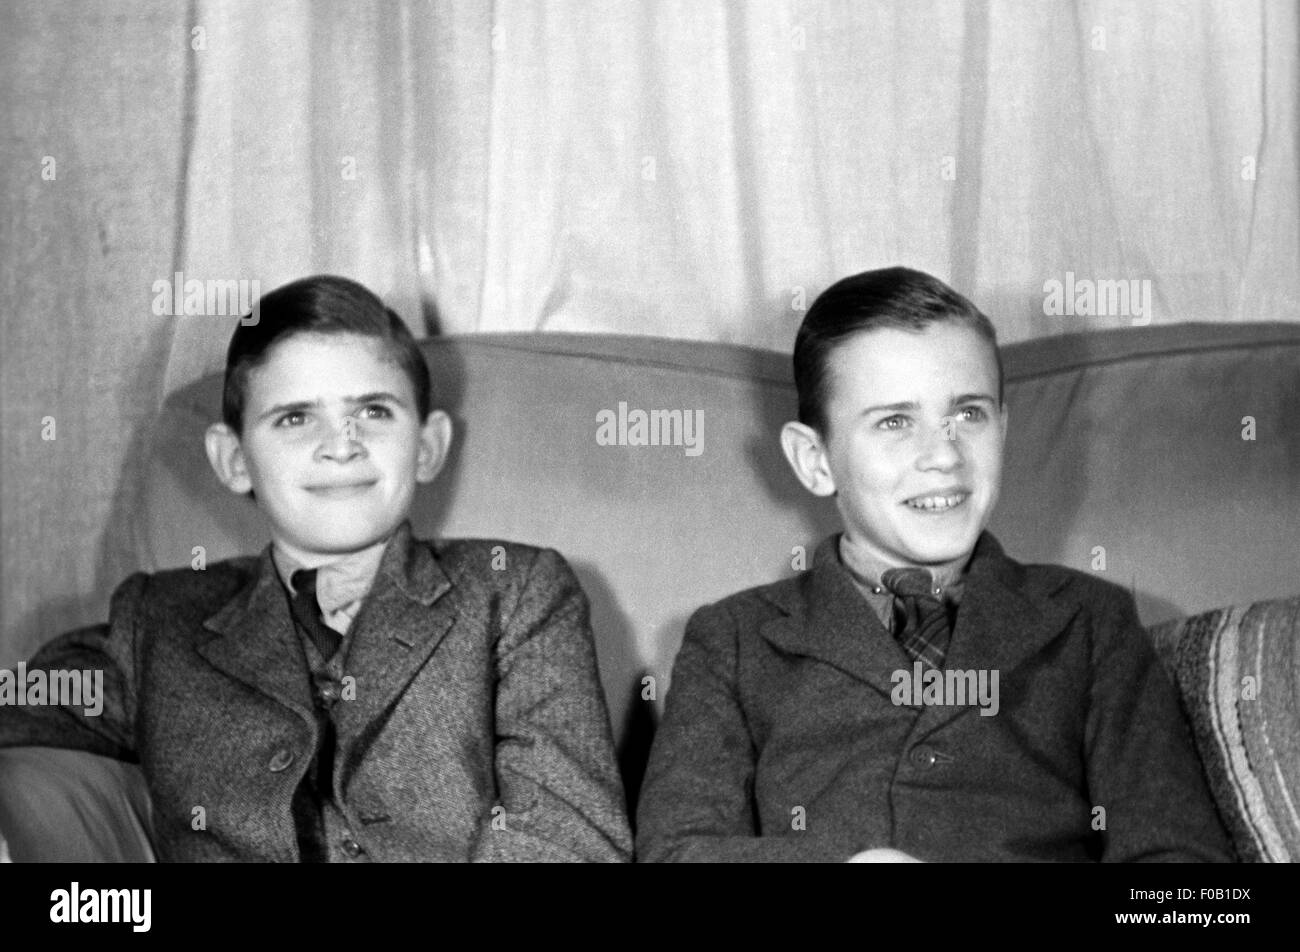 Portrait of two boys Stock Photo